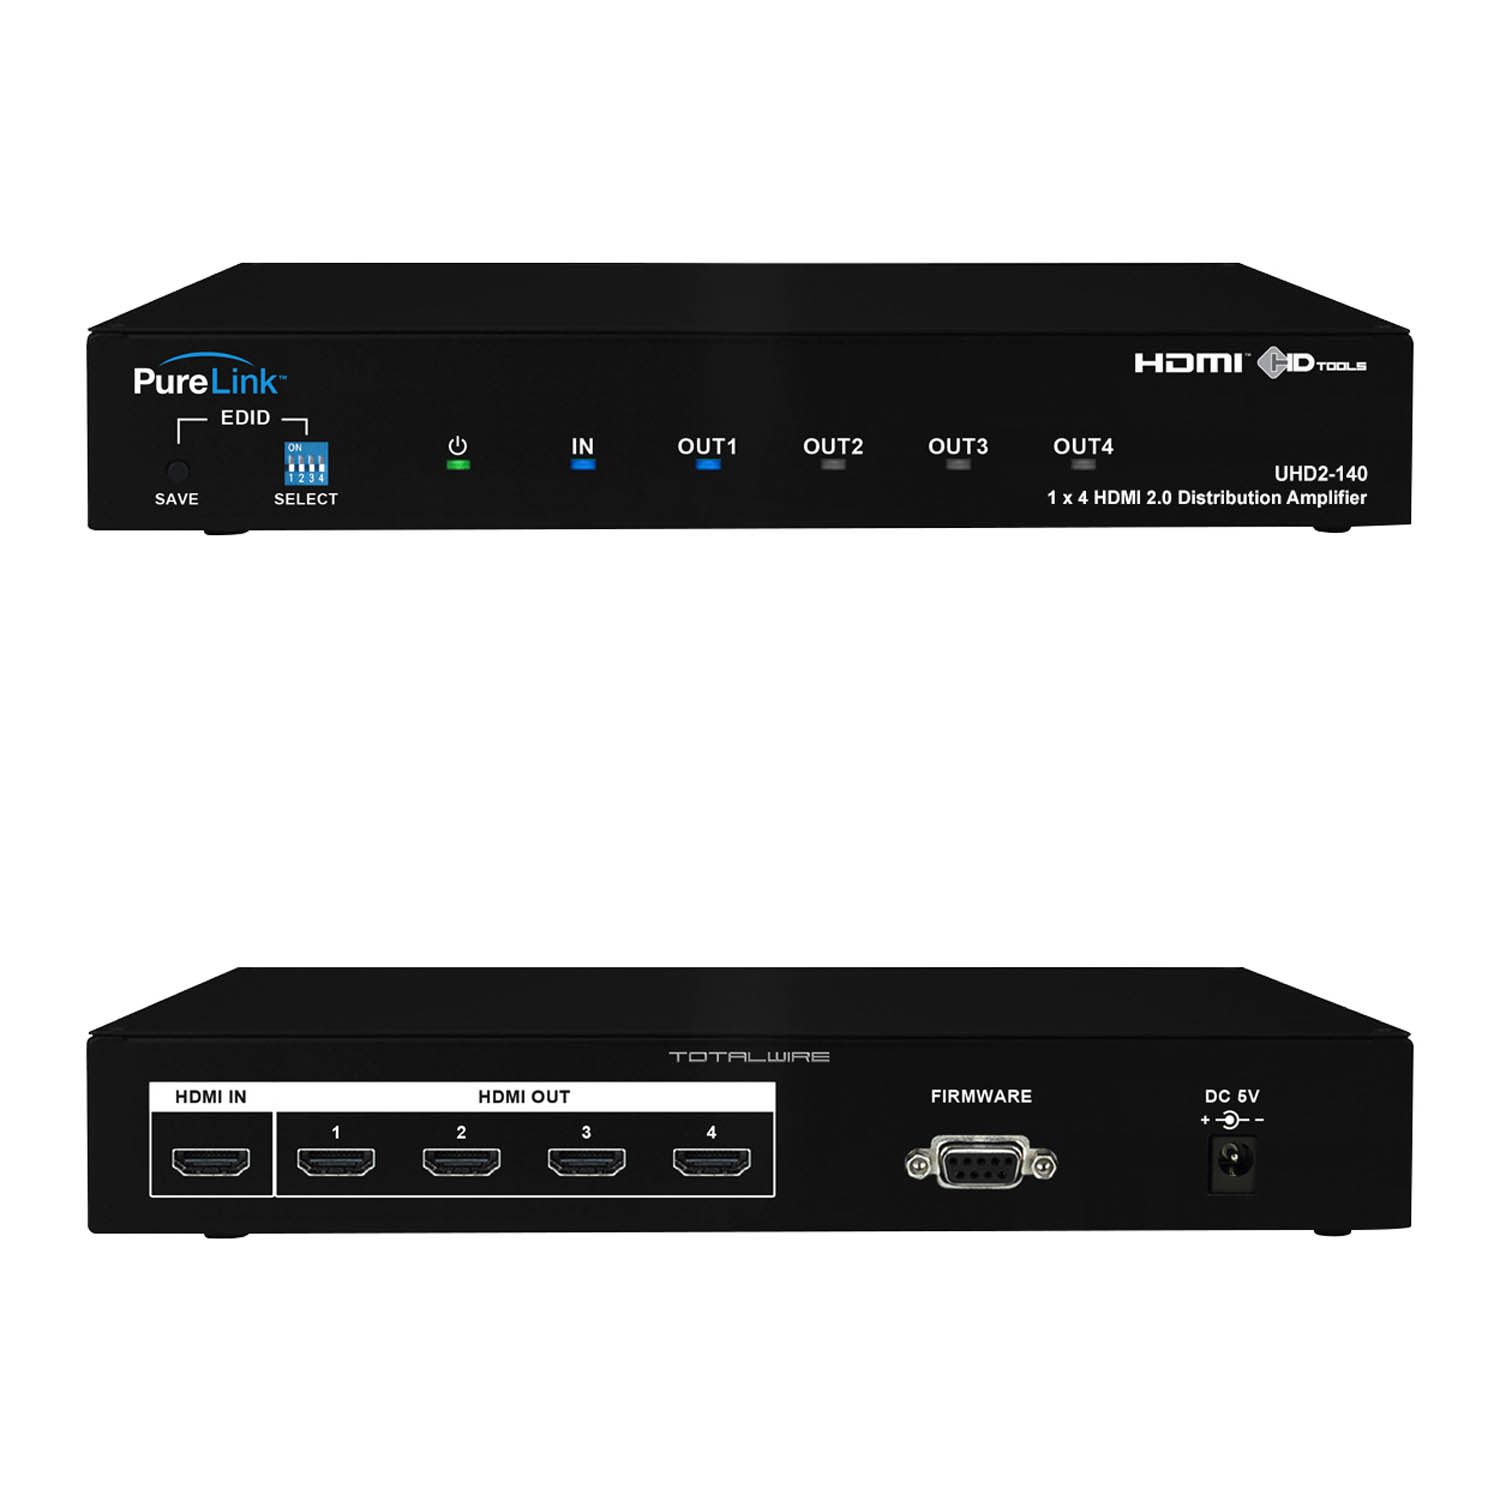 PureLink UHD2-140 1x4 HDMI 2.0 Distribution Amplifier